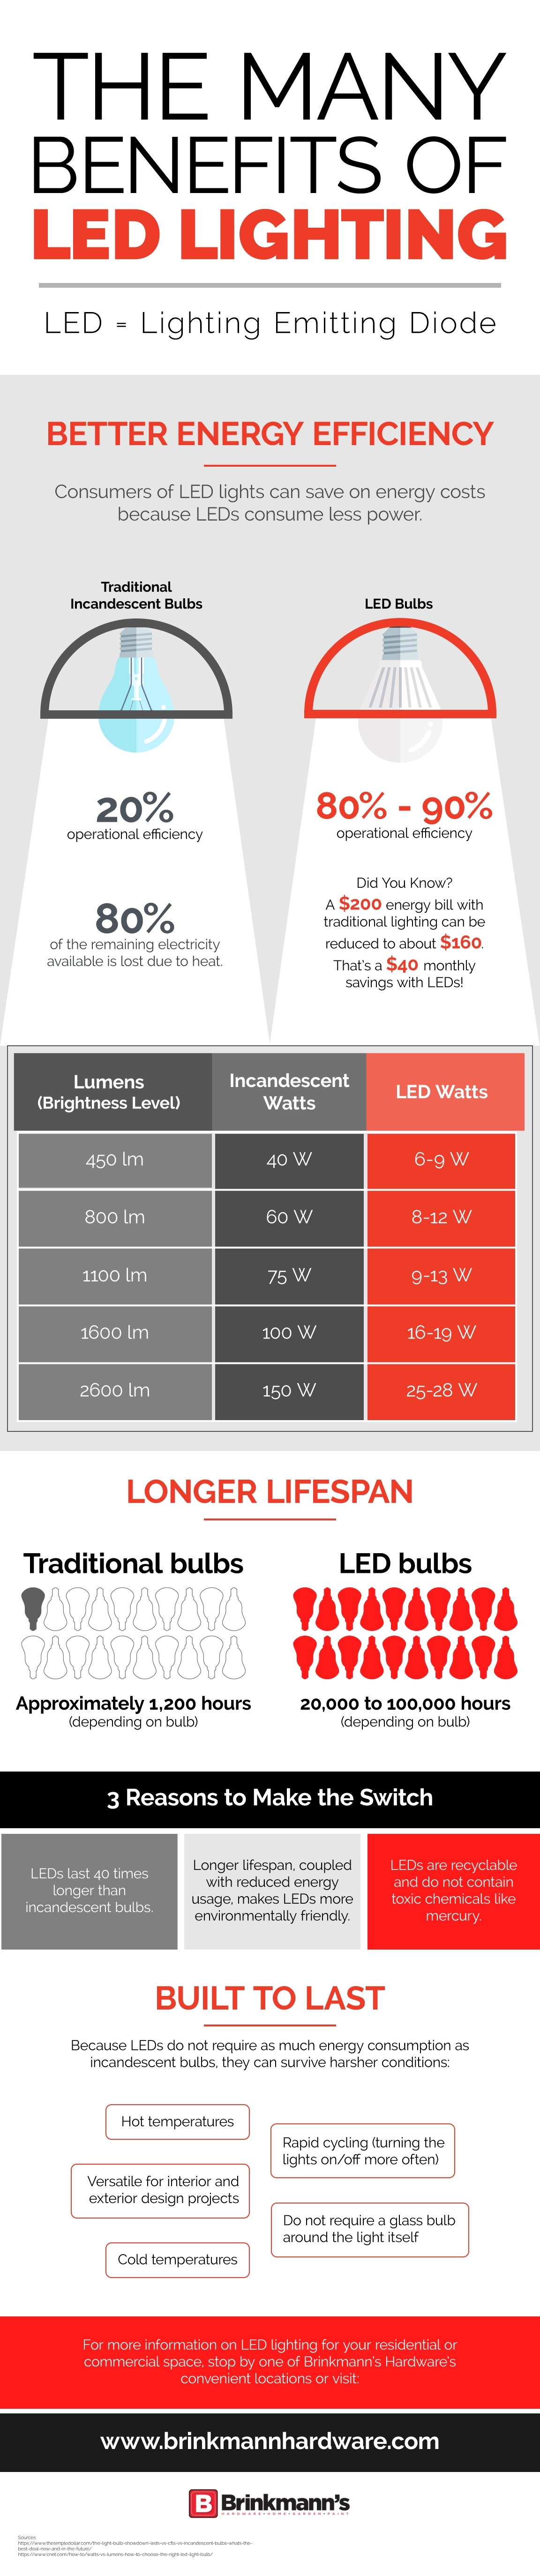 The Many Benefits of LED Lighting